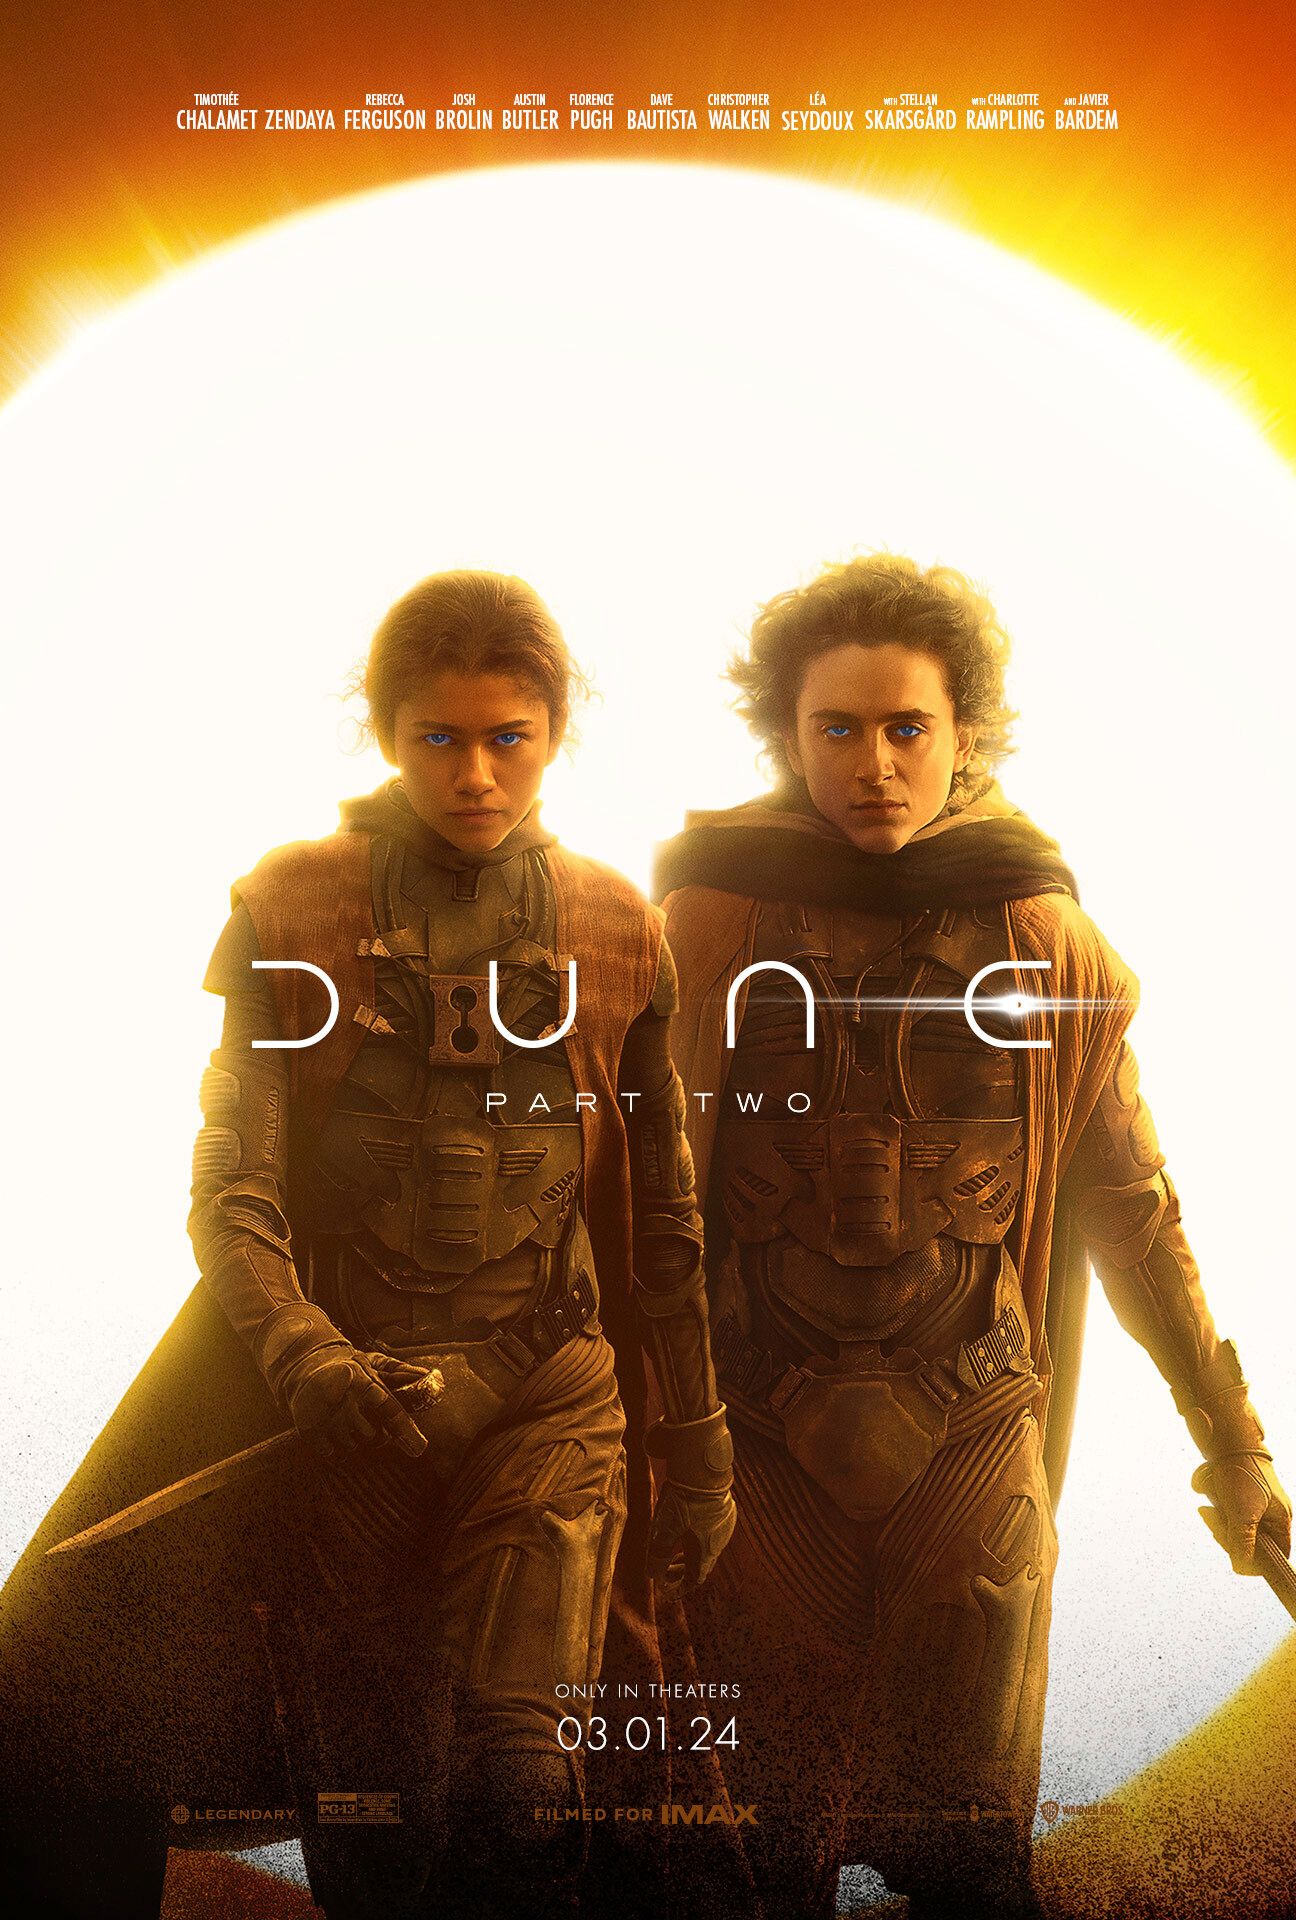 Dune Part 2 Poster Showing Timothee Chalamet as Paul Atreides and Zendaya as Chani Holding Daggers